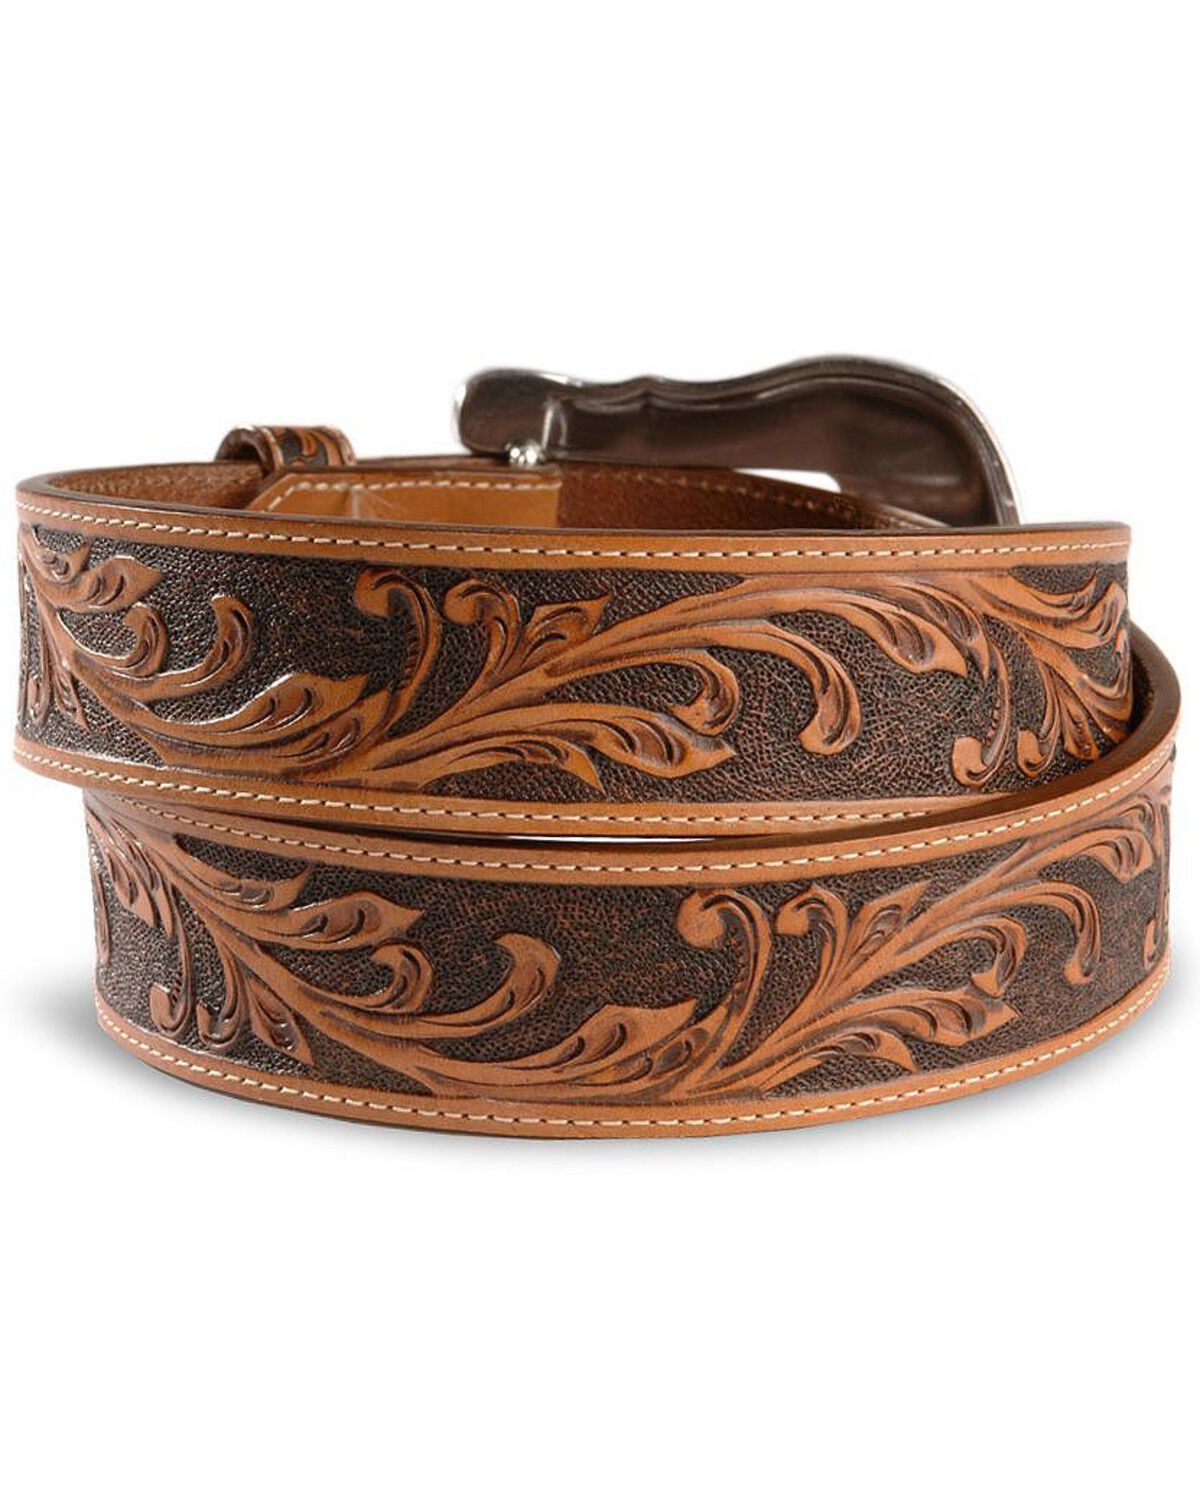 Cowboy leather belt